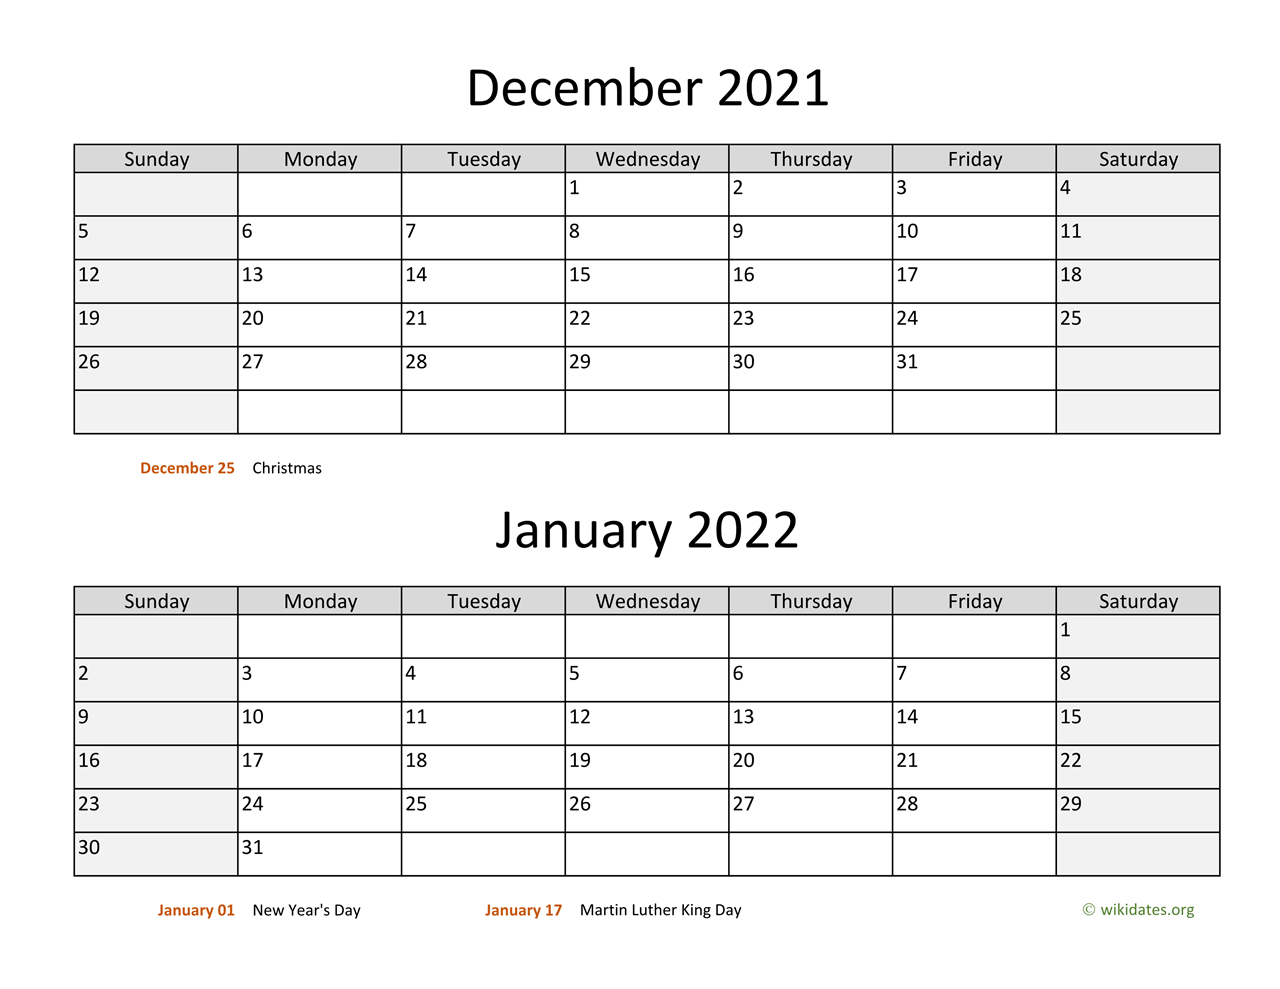 November December January 2022 Calendar December 2021 And January 2022 Calendar | Wikidates.org